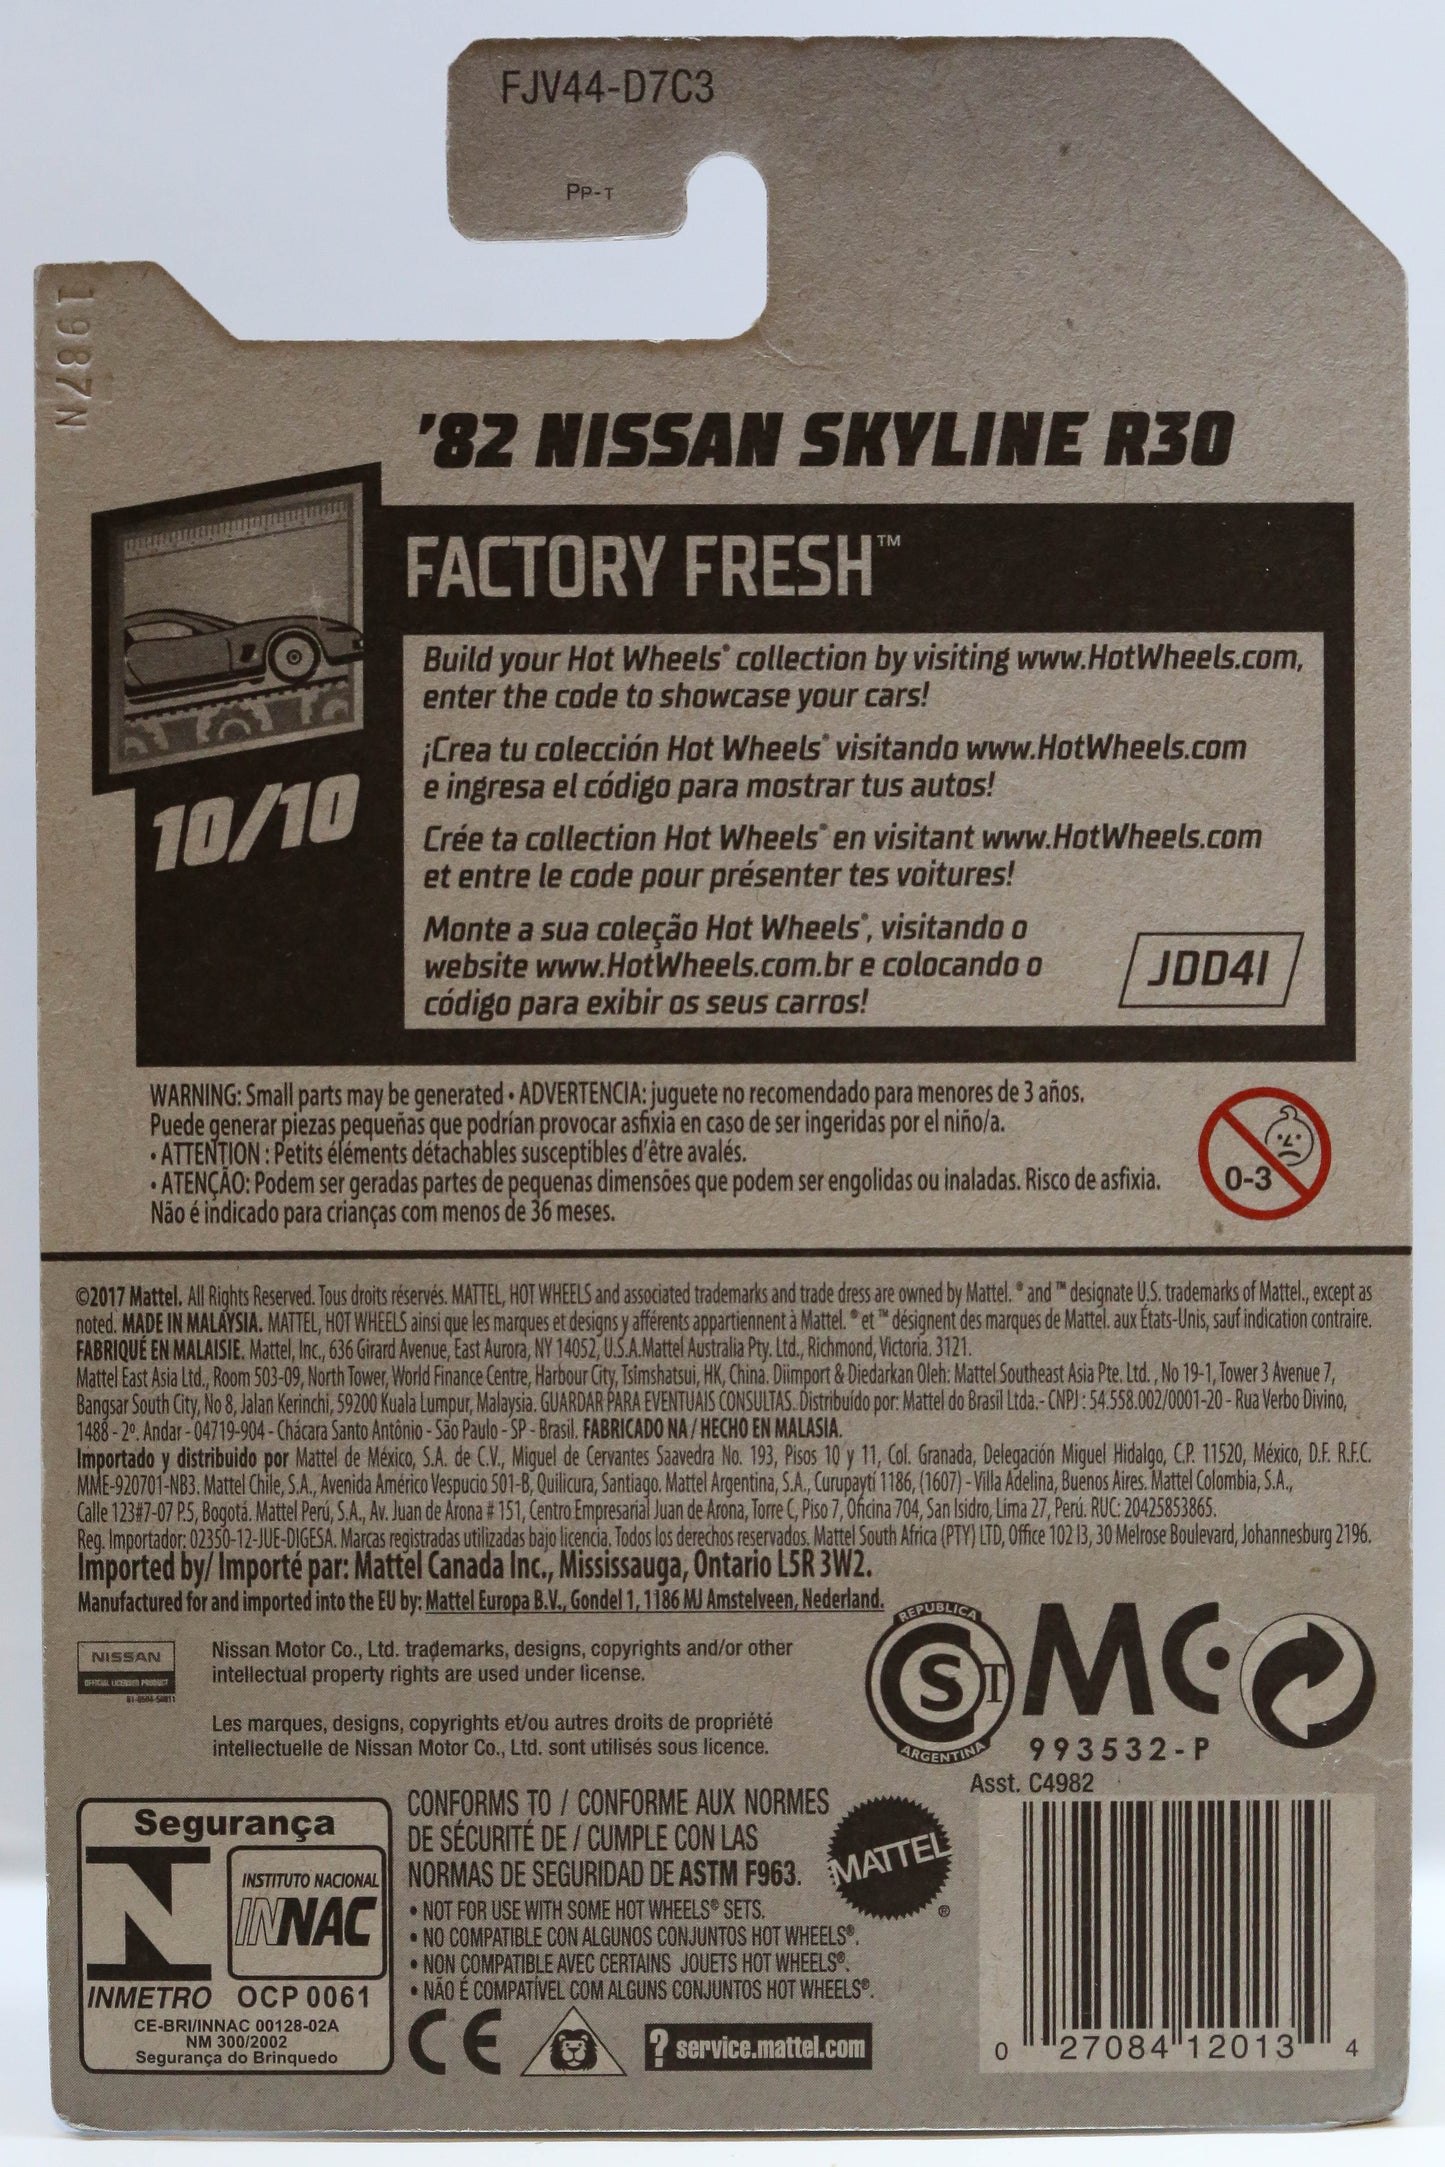 Hot Wheels '82 Nissan Skyline R30 HW Factory Fresh FJV44 - Plus (+) a Bonus Hot Wheel - Rare and VHTF